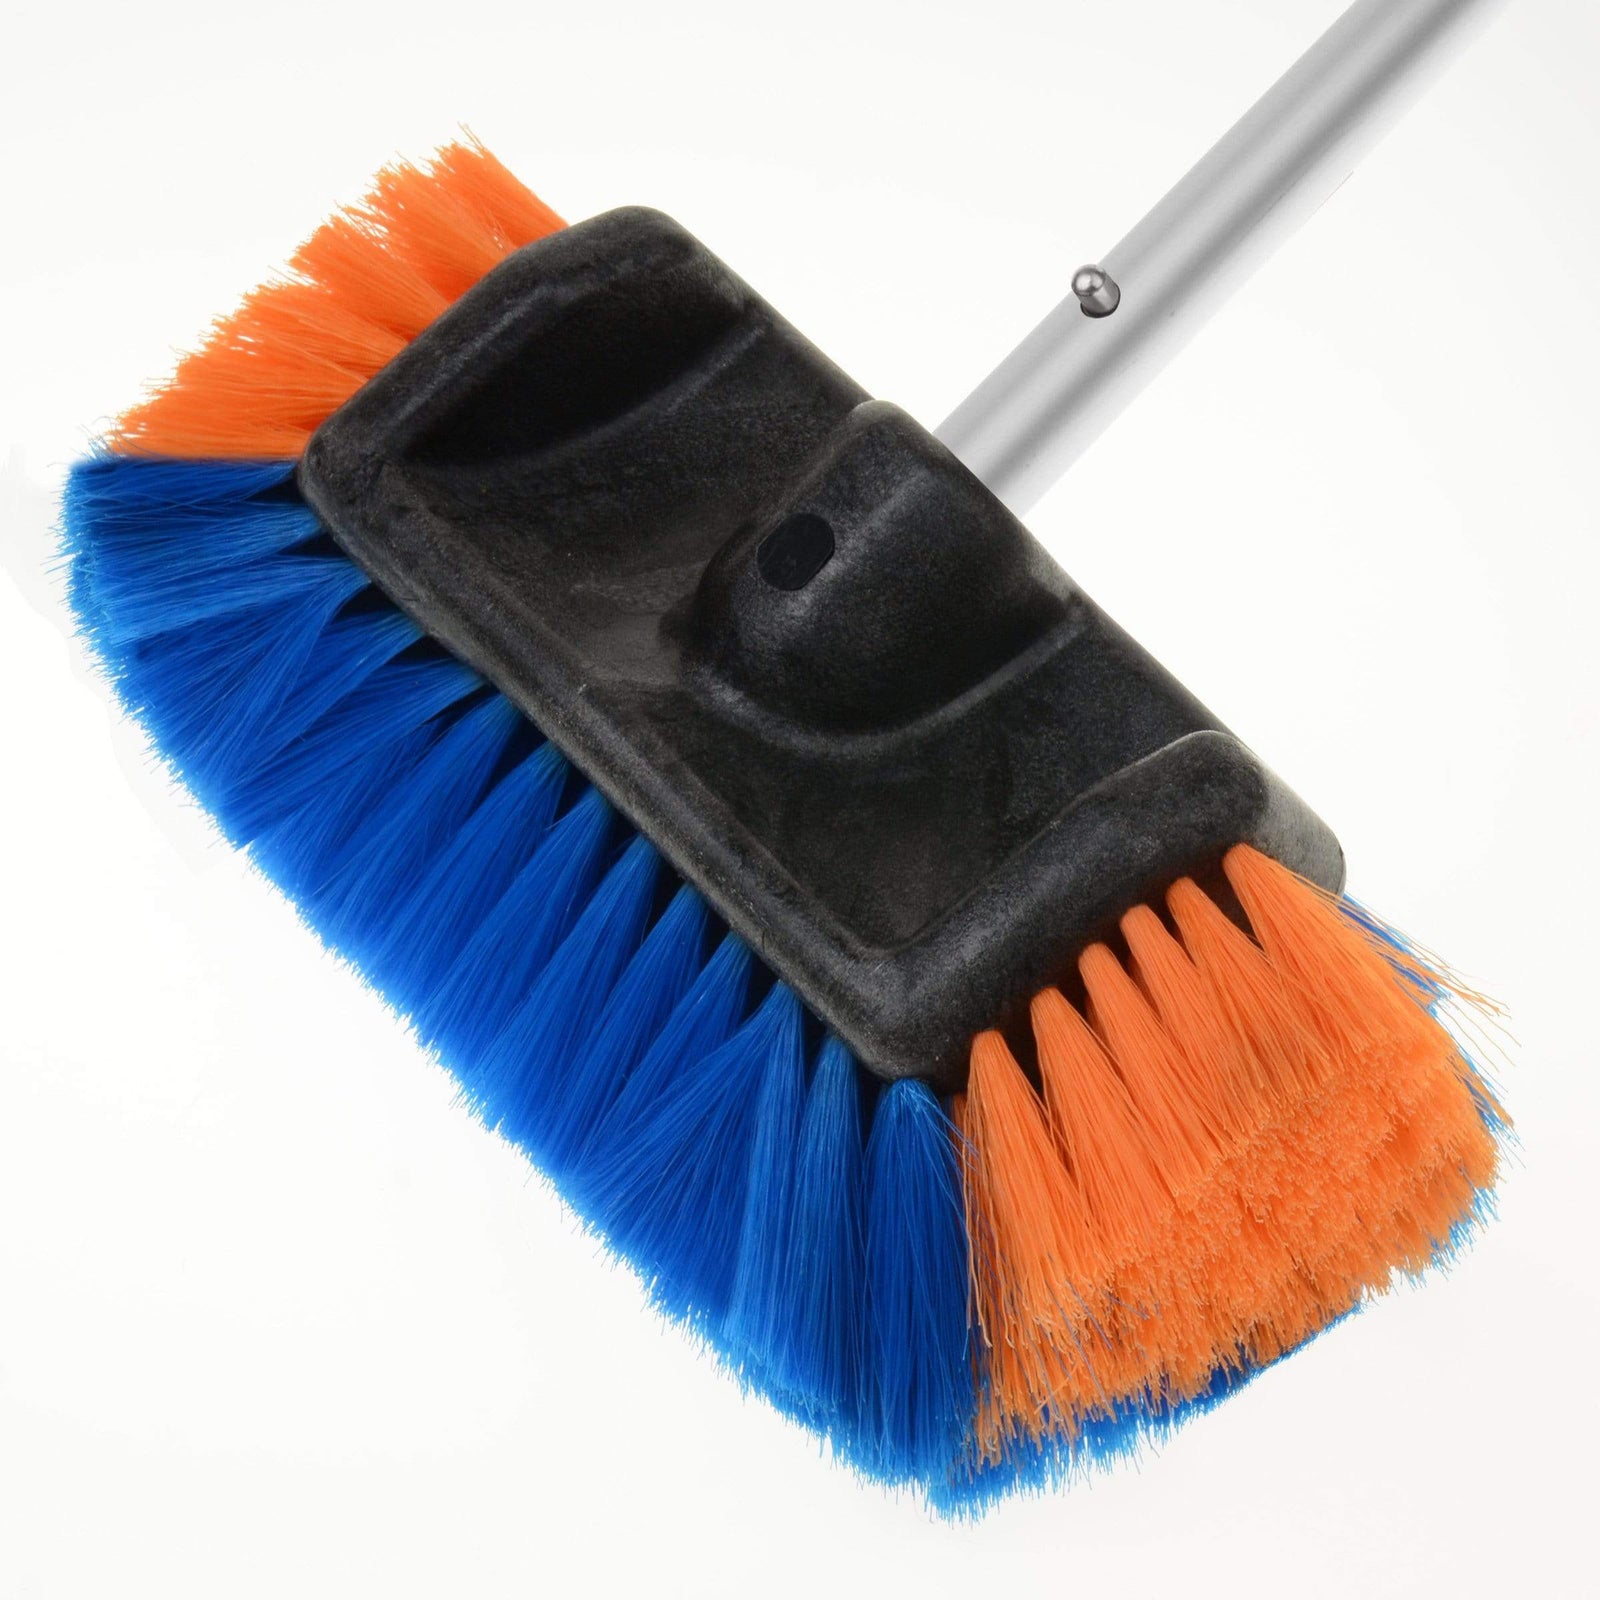 Blue Cleaning Scrub Brush